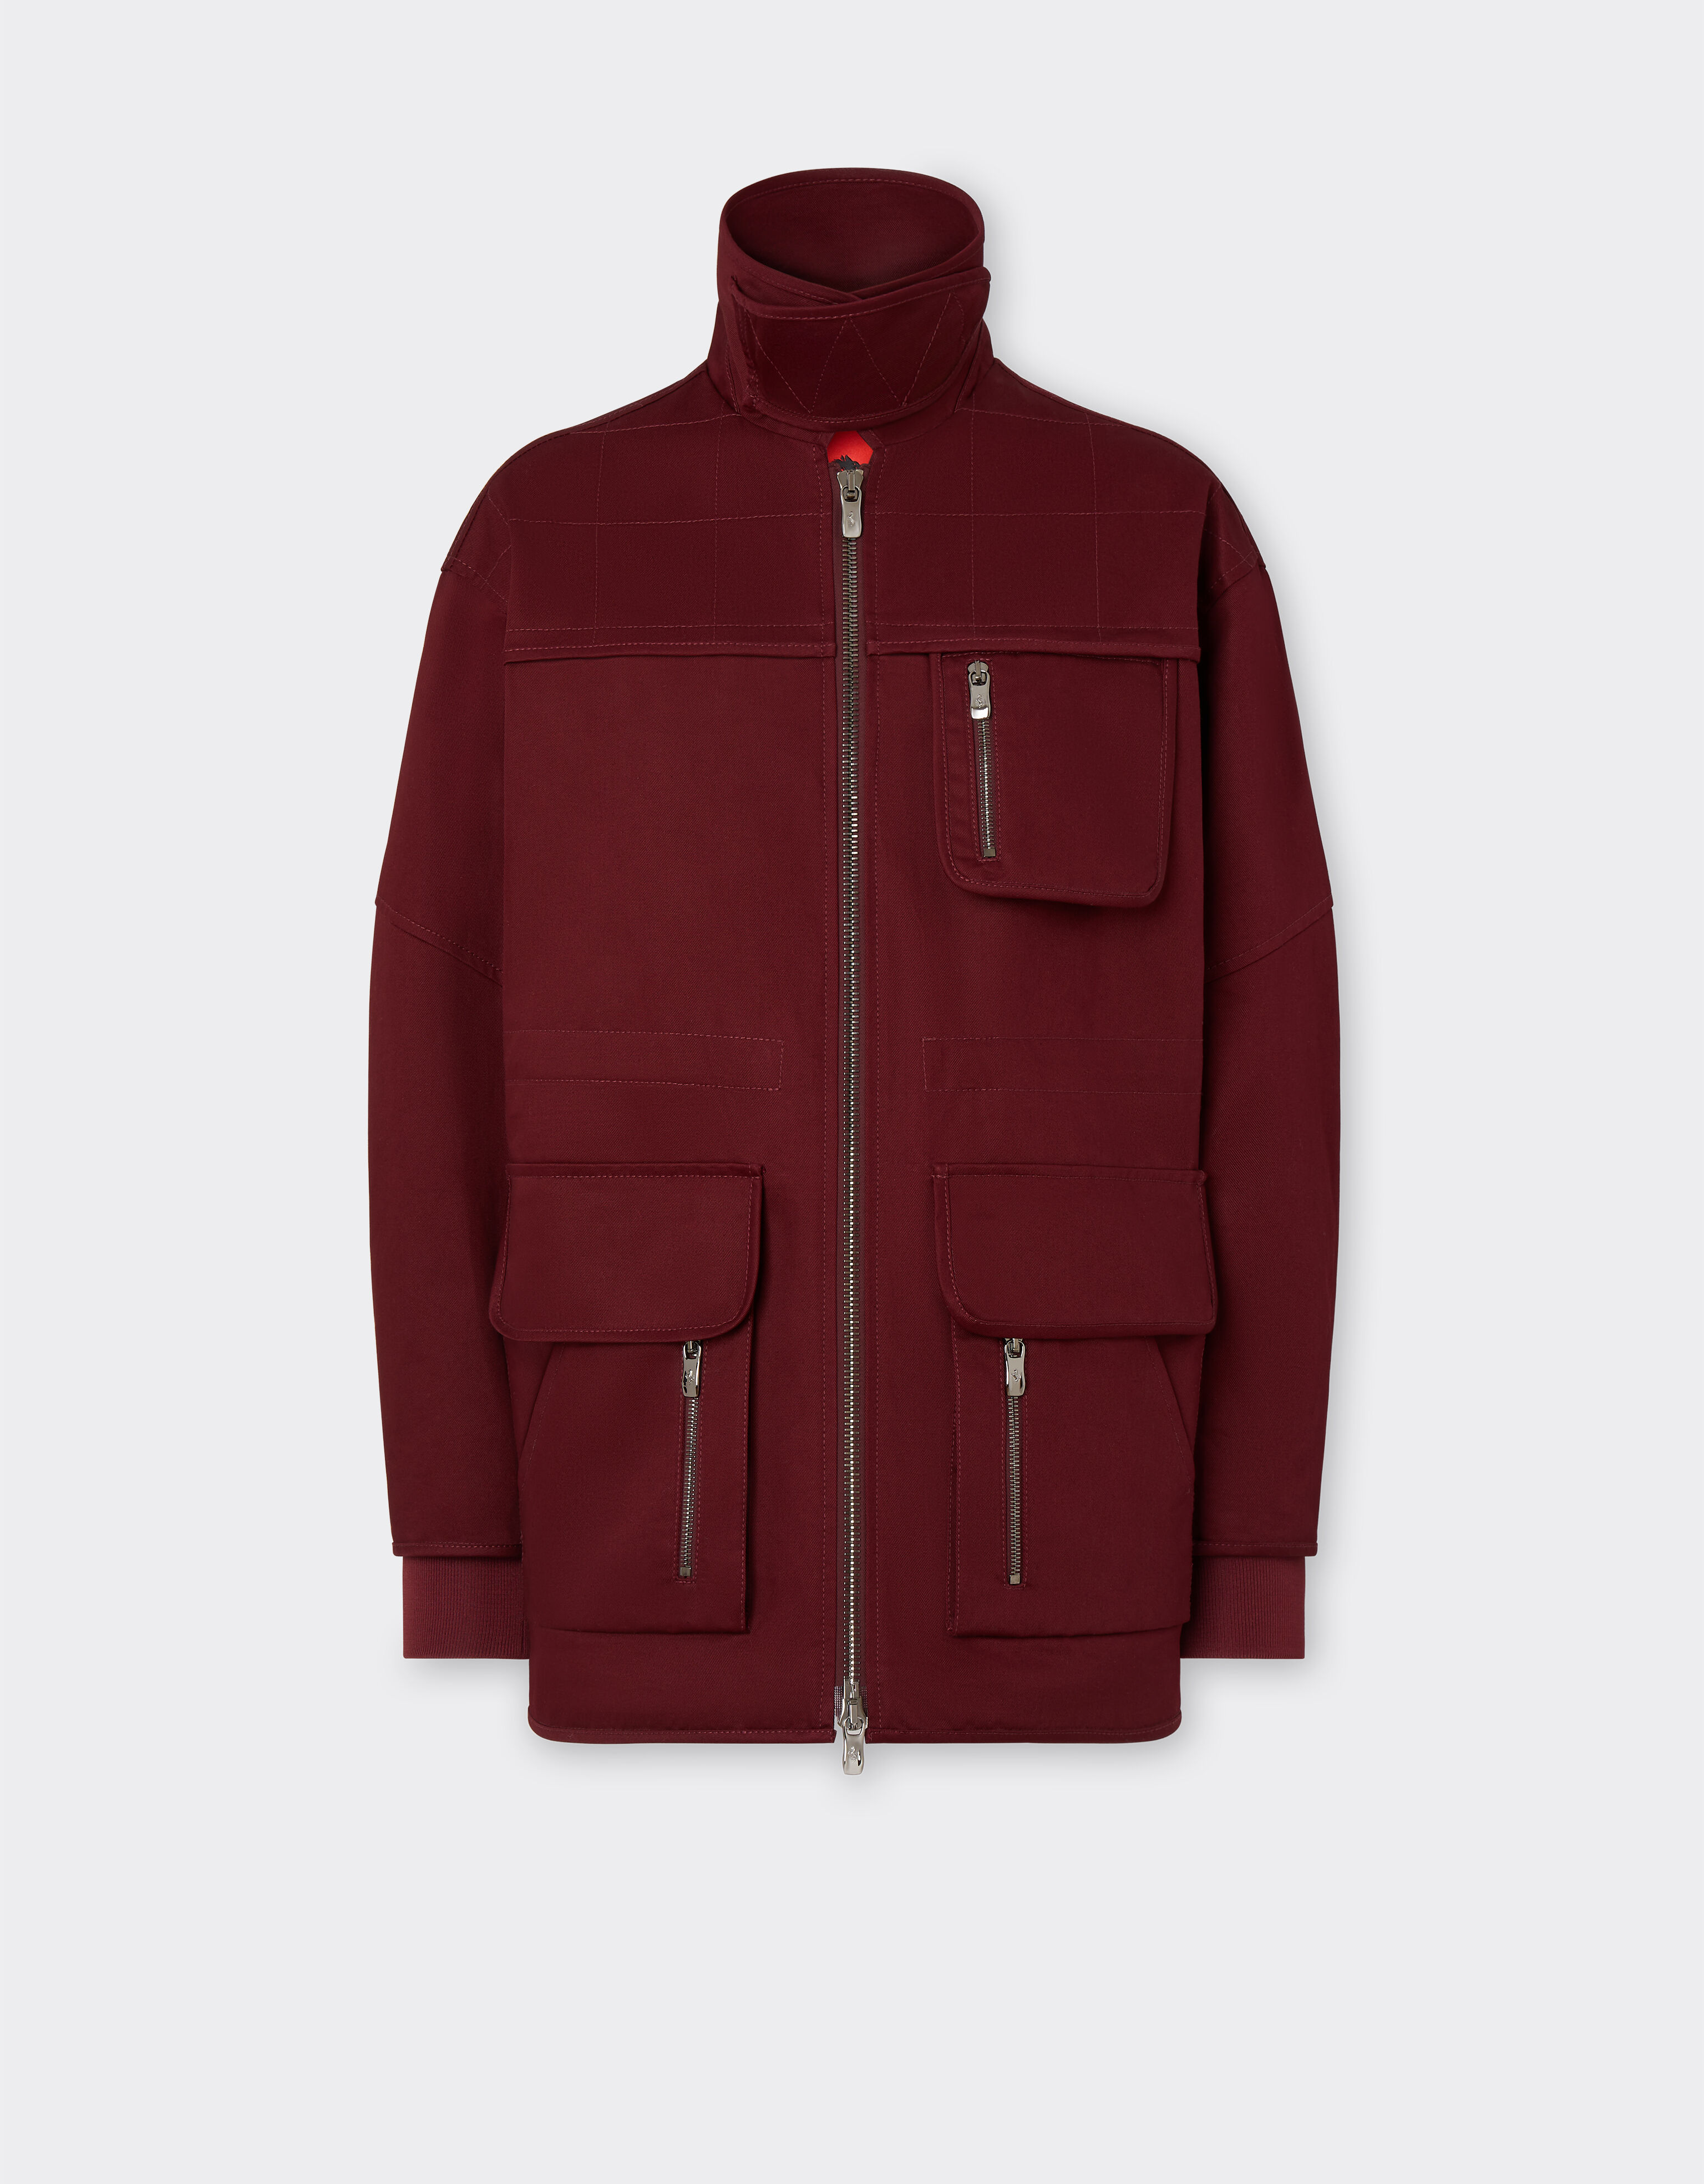 Ferrari Bomber jacket in organic cotton Burgundy 48266f